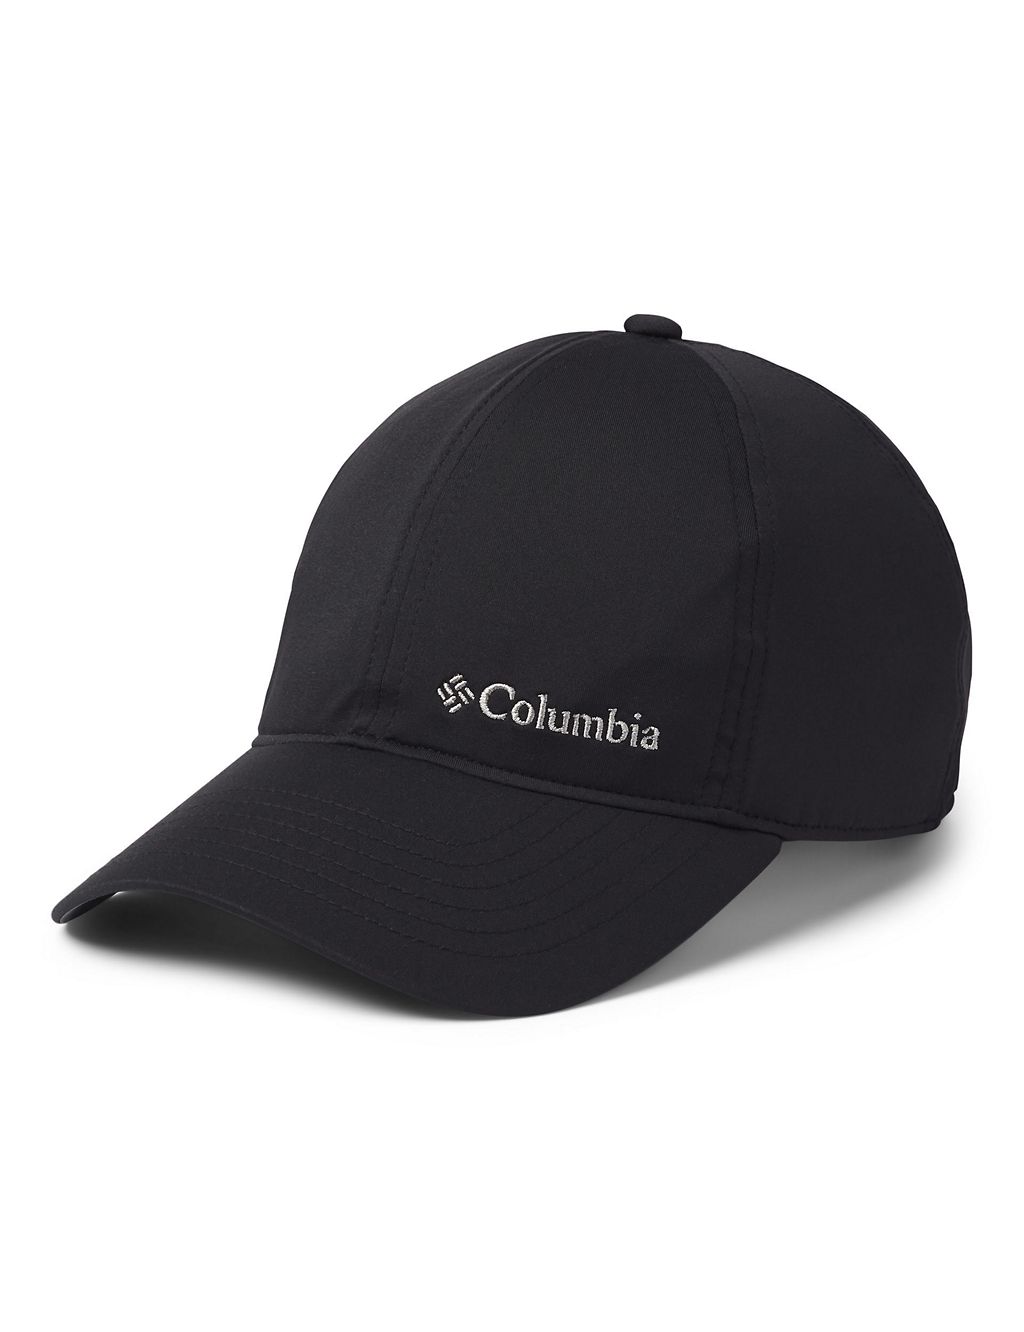 Coolhead™ II Baseball Cap 3 of 4